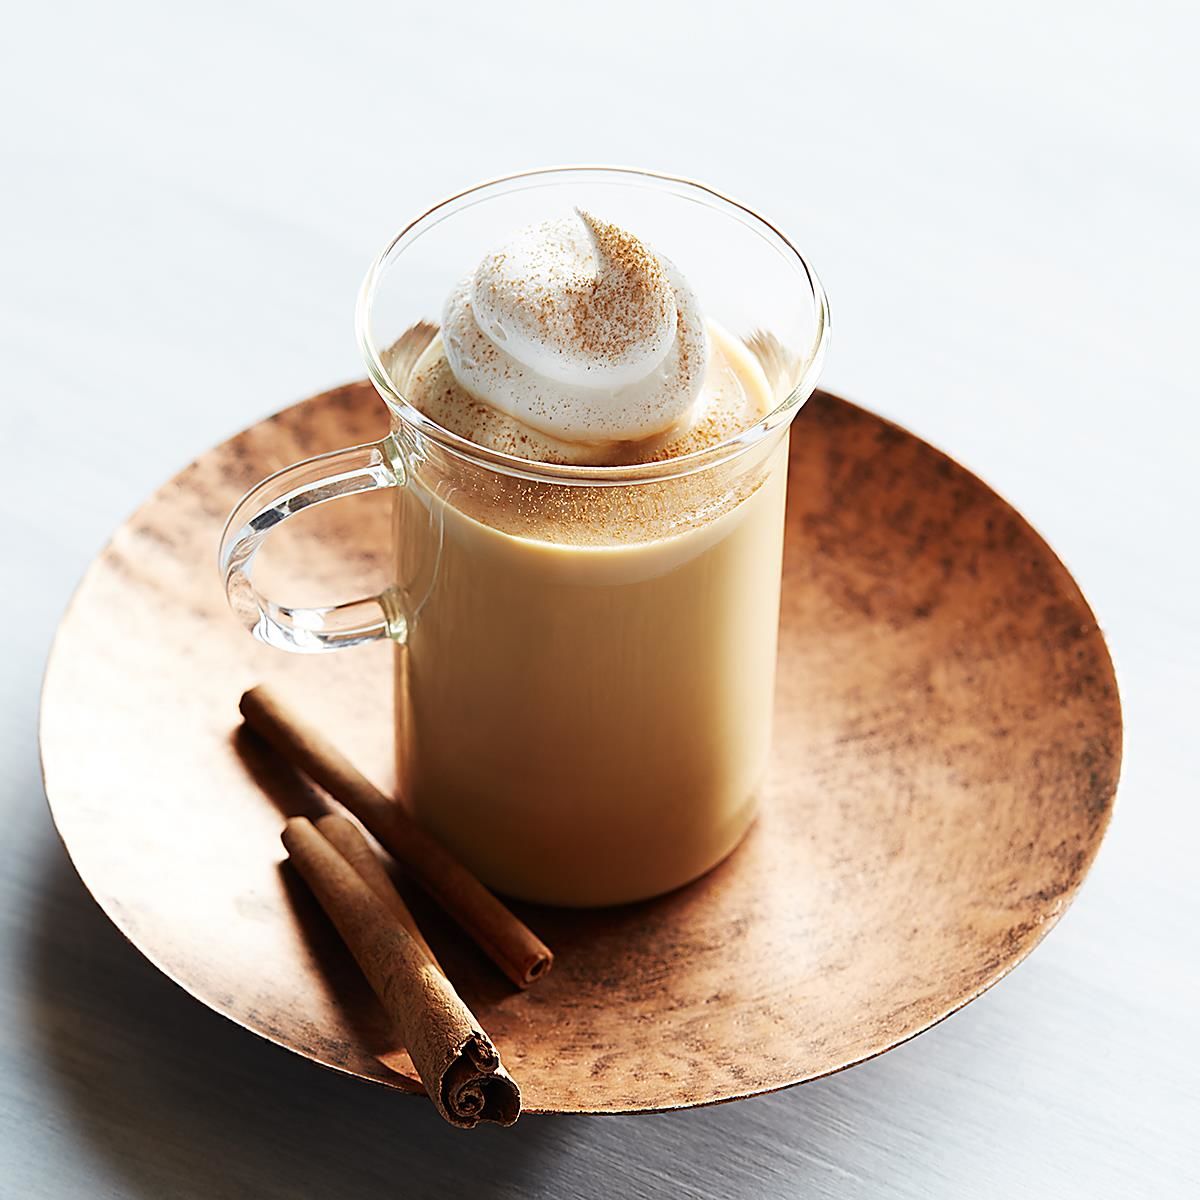 Cinnamon roll – caffè latte